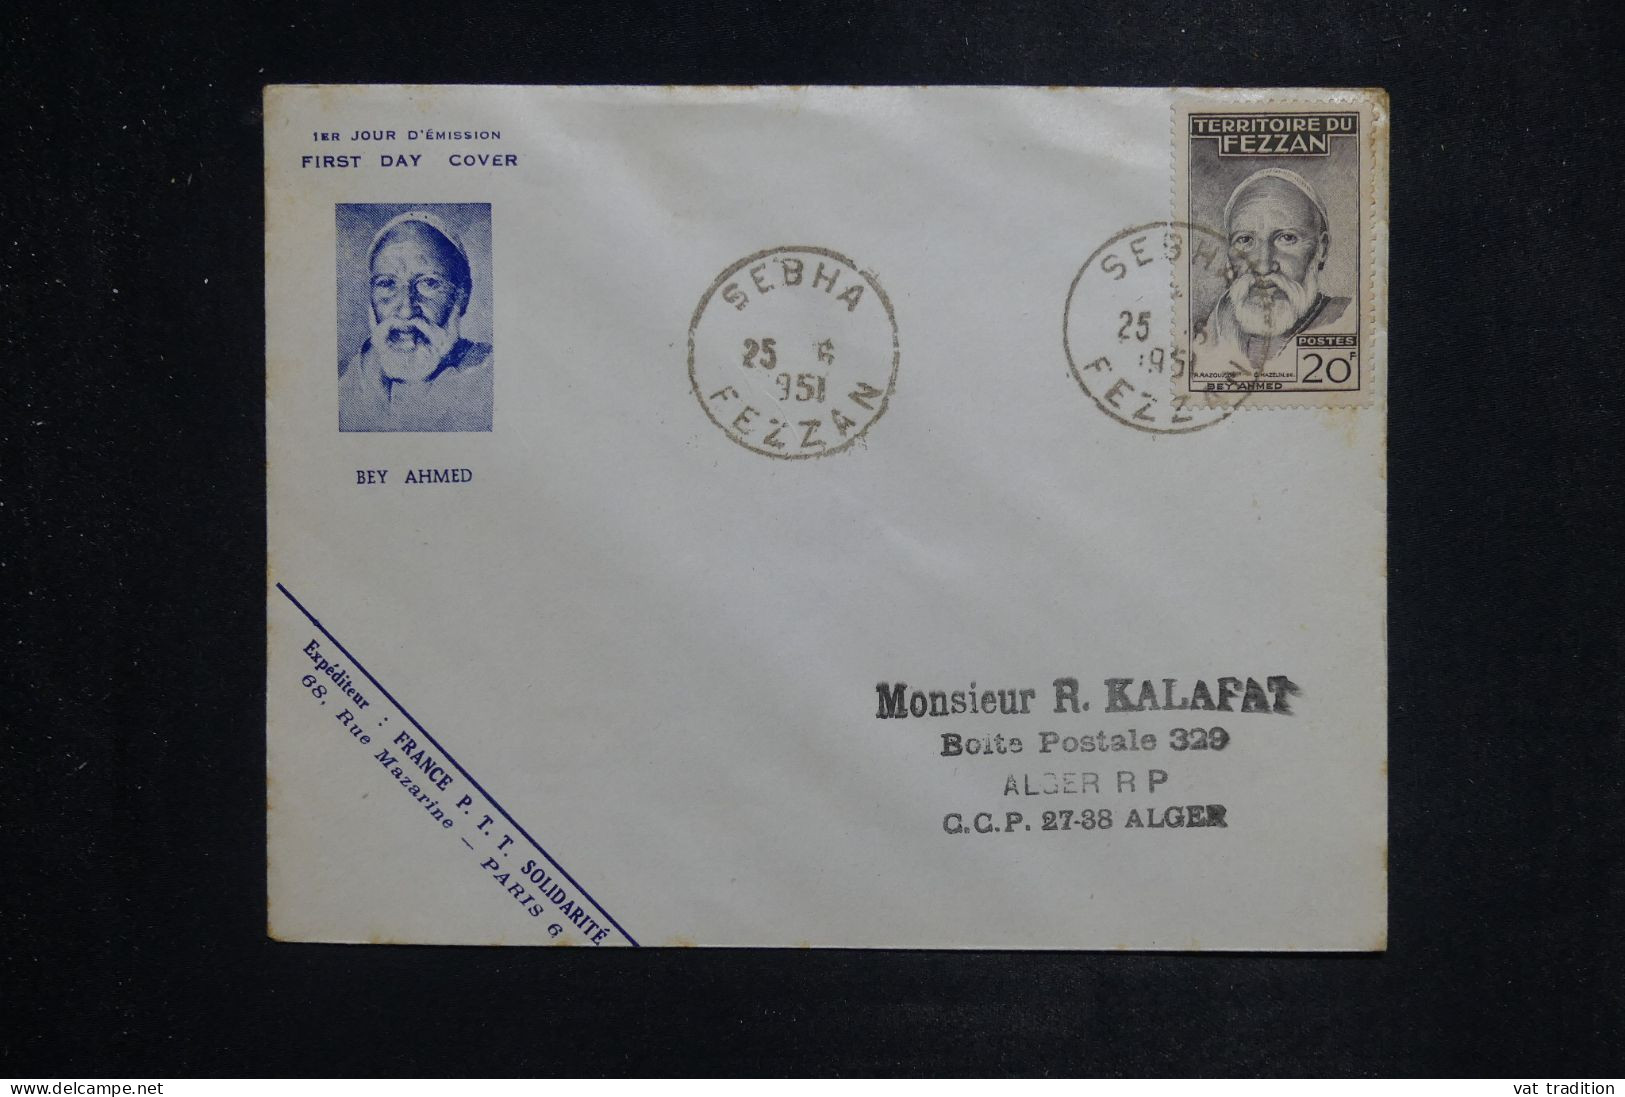 FEZZAN  - Enveloppe FDC En 1951 - Beyahmed - L 151104 - Storia Postale